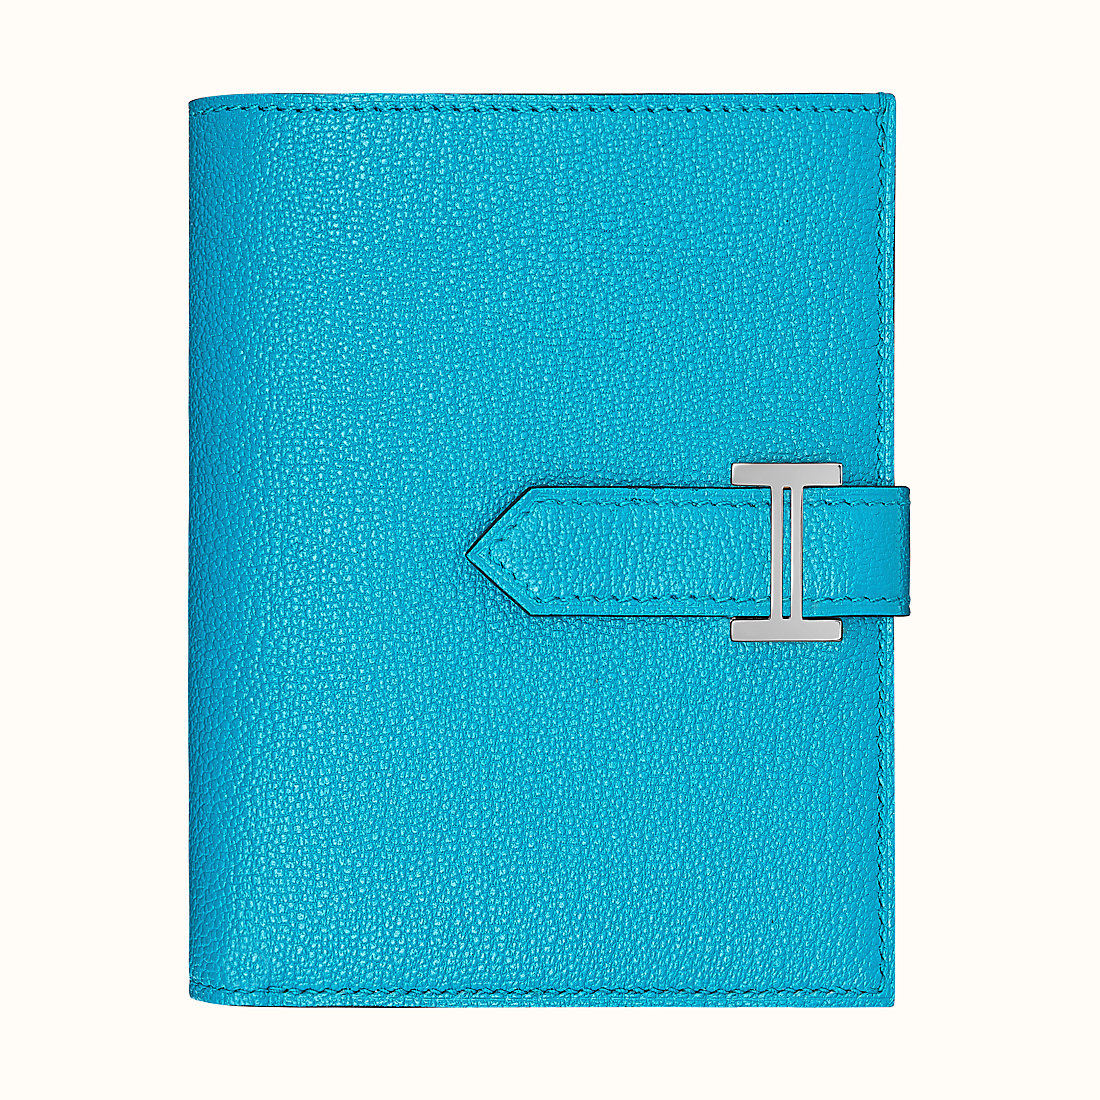 Bahrain Hermes Bearn Compact wallet 0F Bleu Frida Chevre Mysore 山羊皮